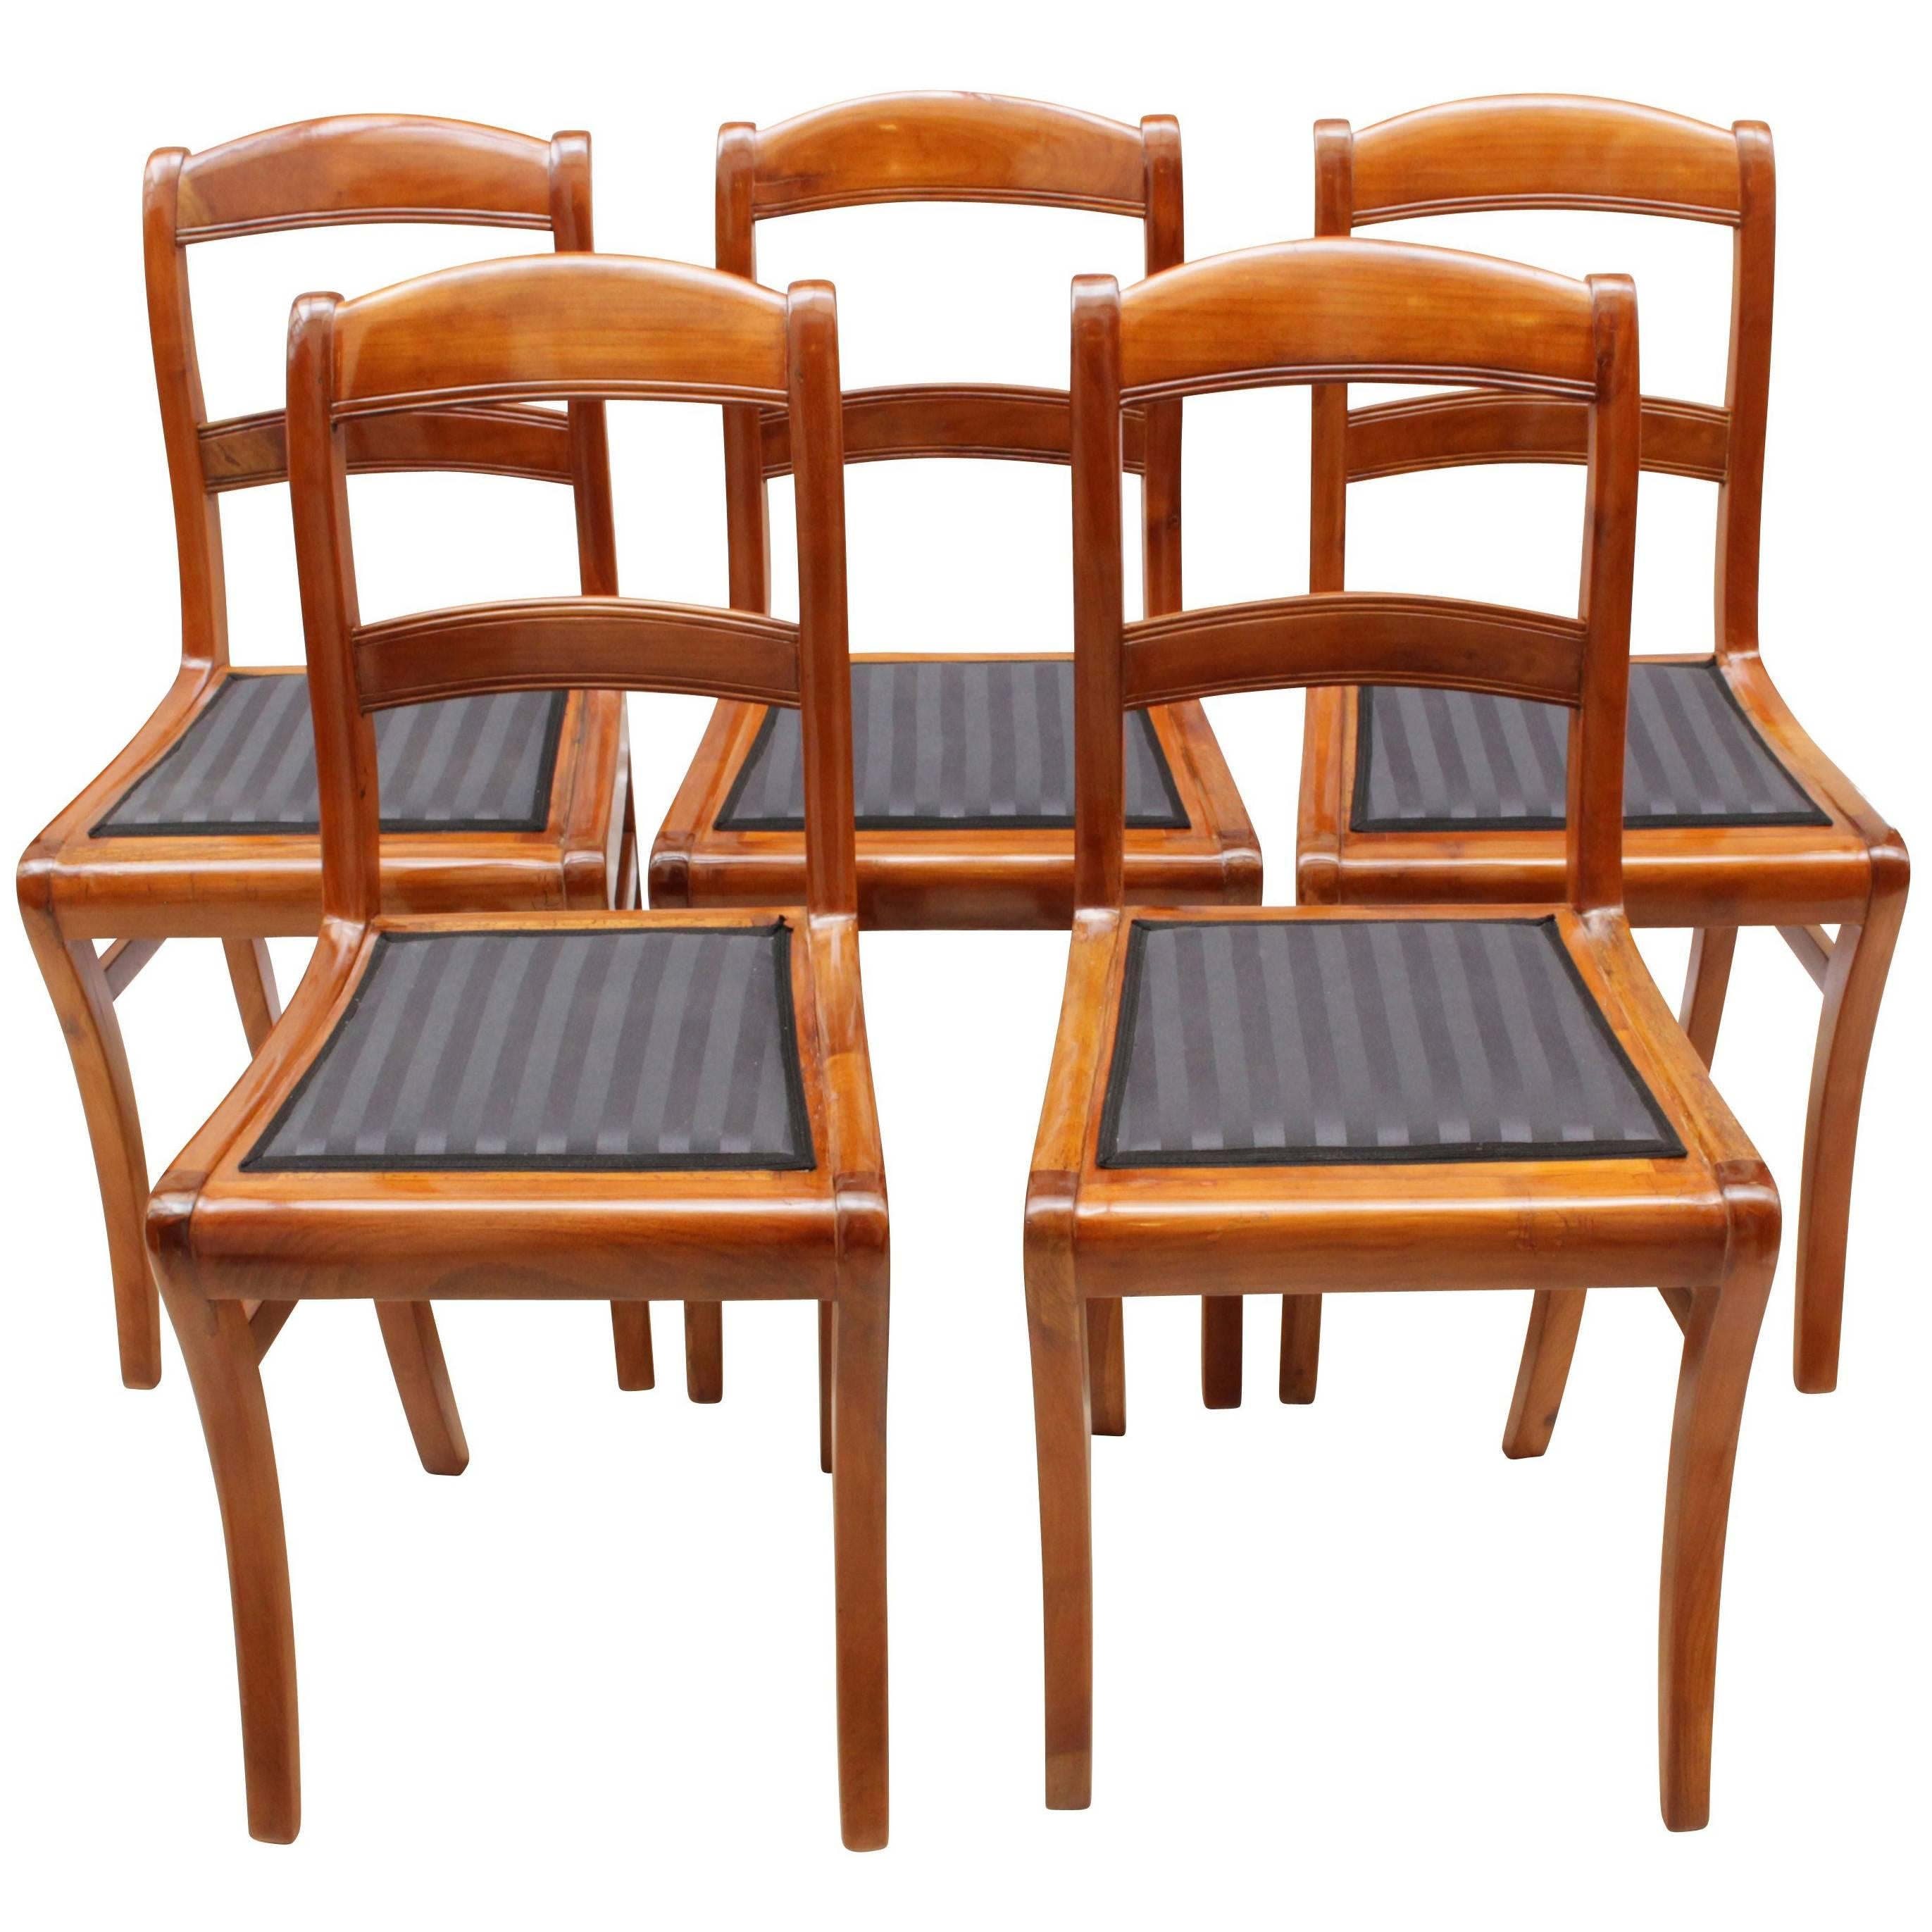 19th Century, Set of Five Solid Cherry Biedermeier Chairs